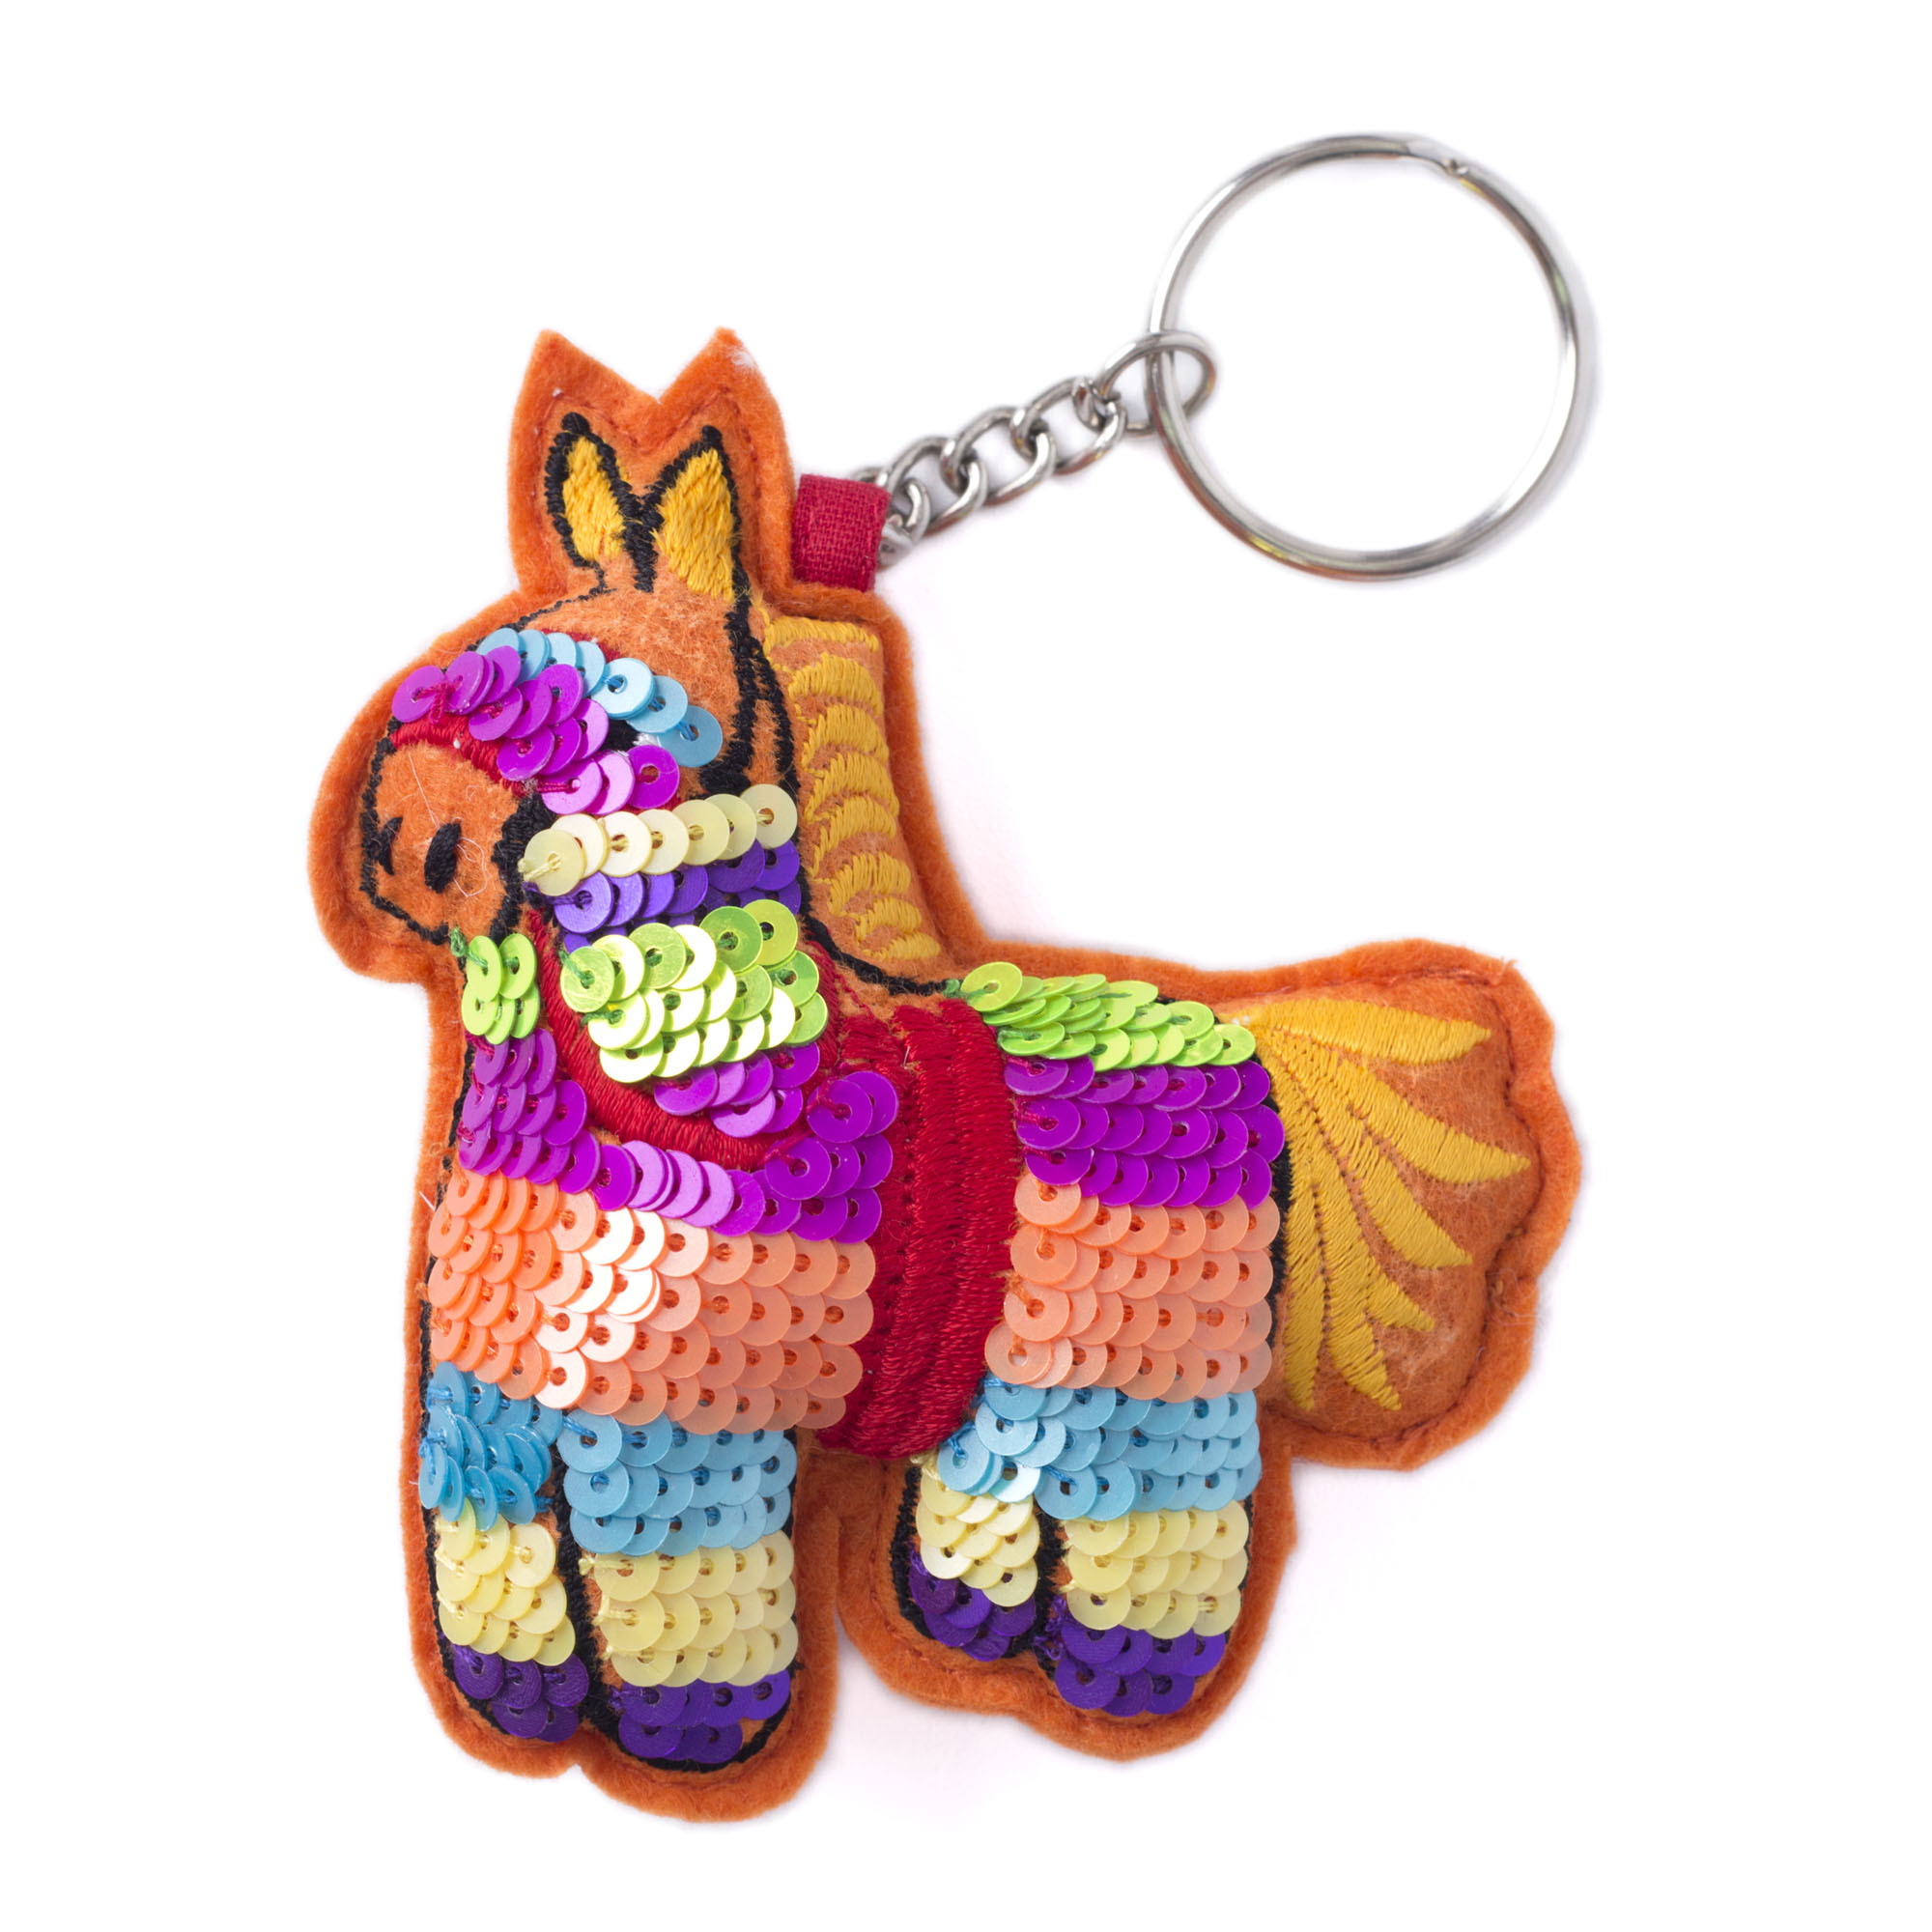  CarsonChase - Paquete de piñata de burro mexicano con